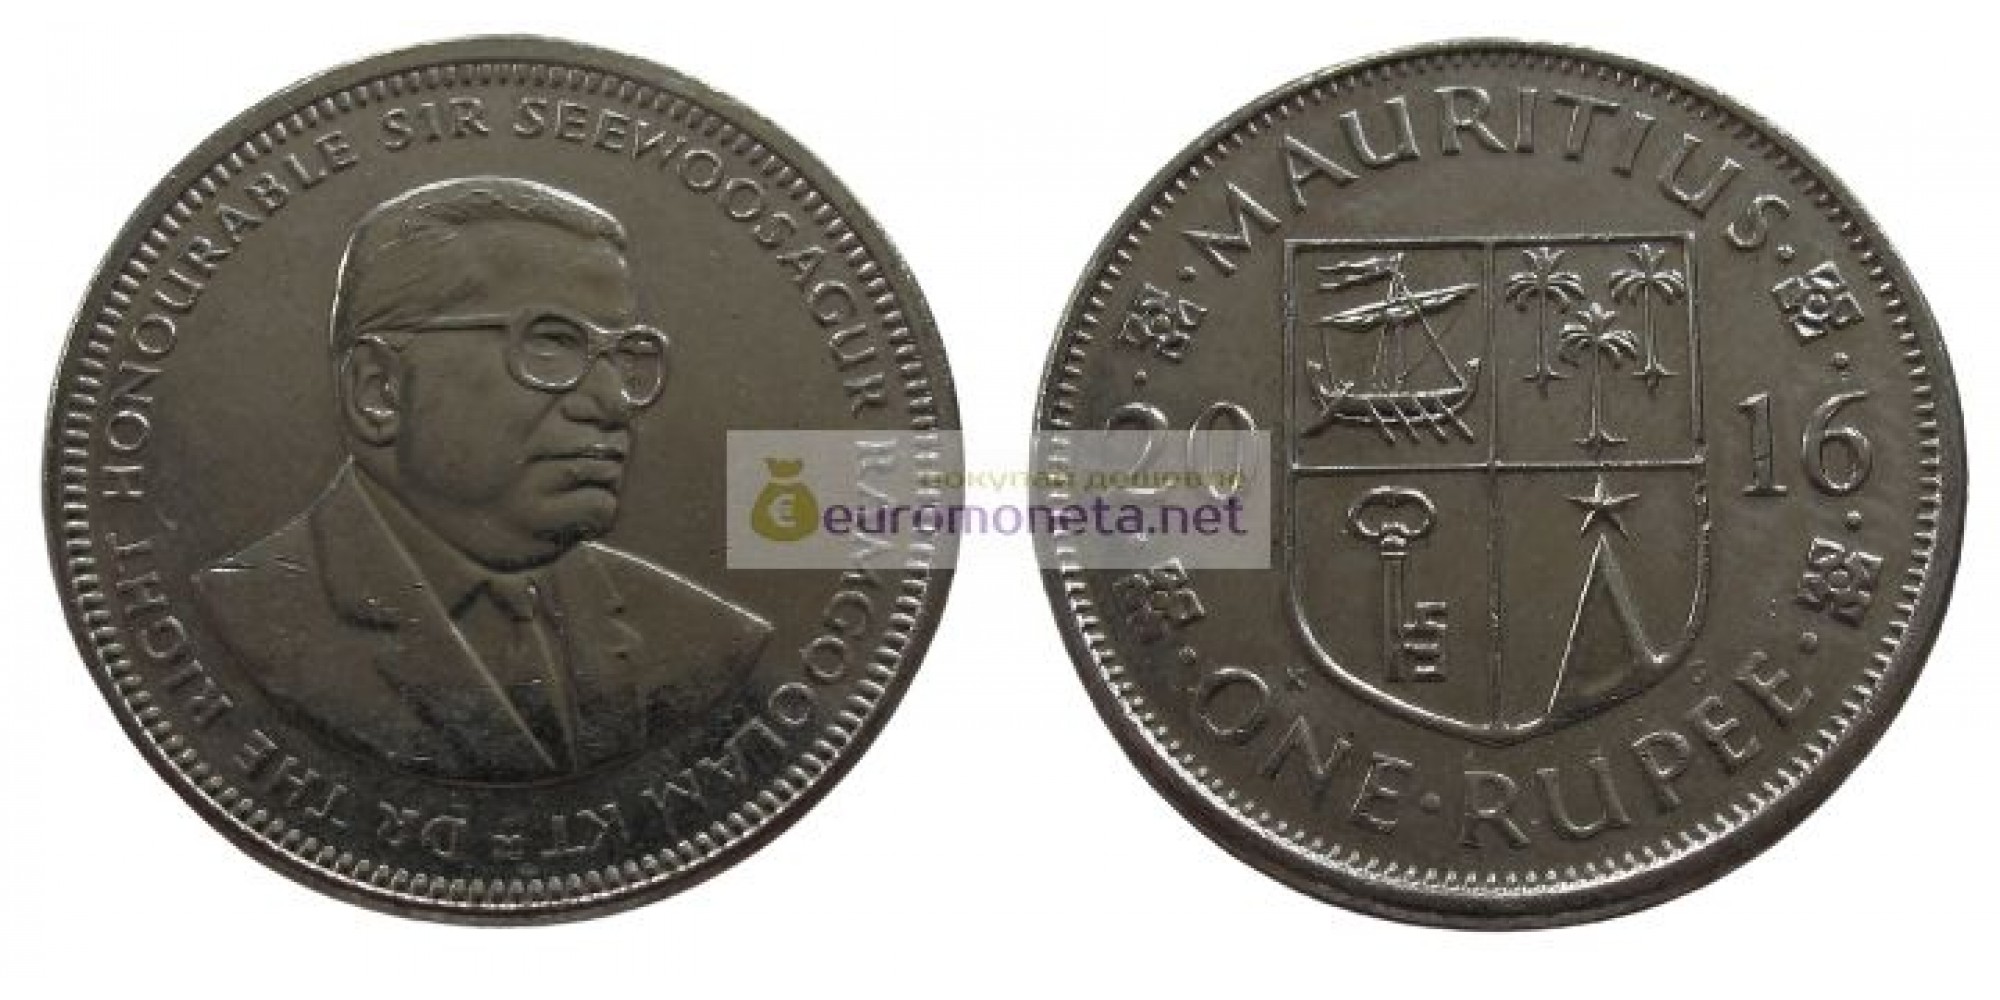 Маврикий 1 рупия 2016 год. Сивусагур Рамгулам